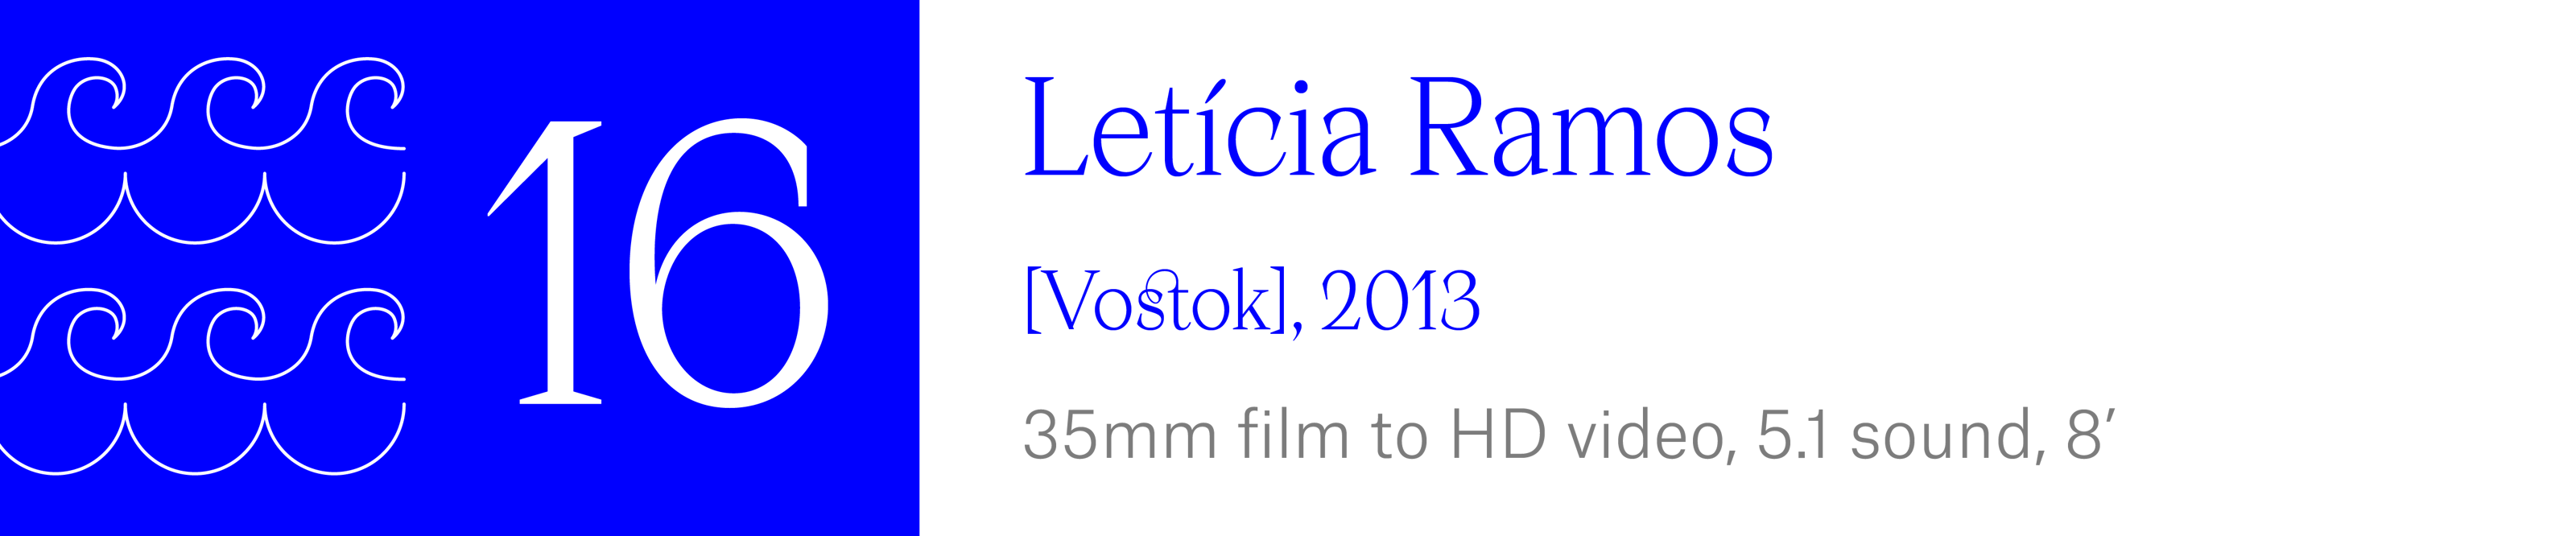 The Wave (16) - Letícia Ramos, Vostok, 2013. 35mm film to HD video, 5.1 sound, 8 minutes.